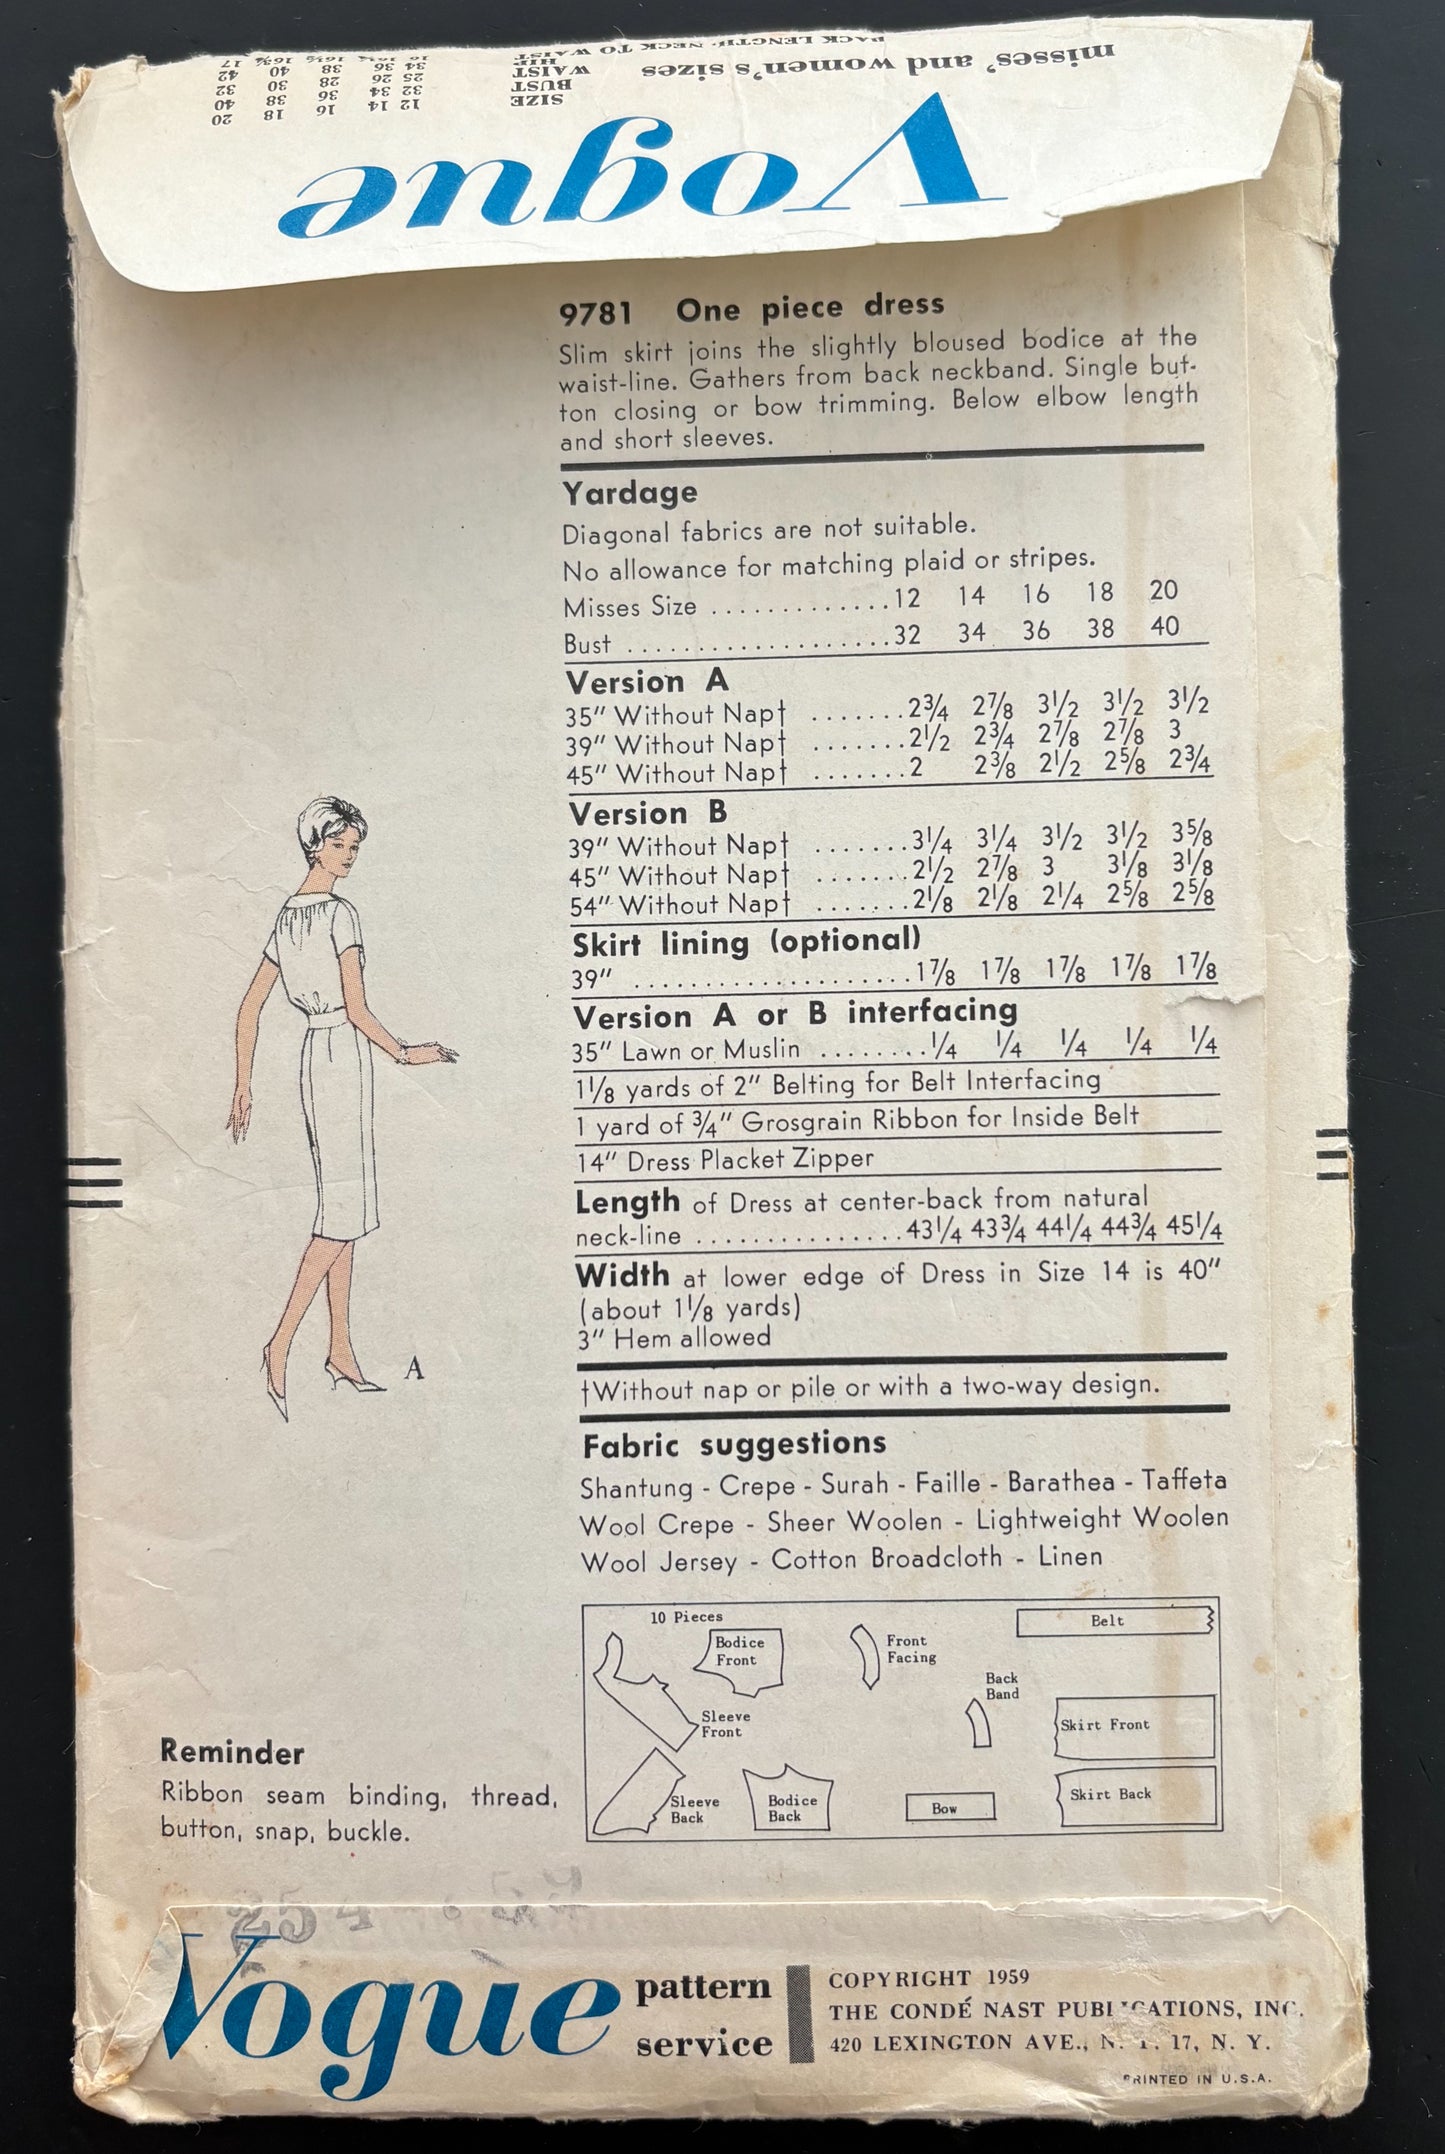 1959 Vogue 9781 One Piece Dress Sewing Pattern - Size 18